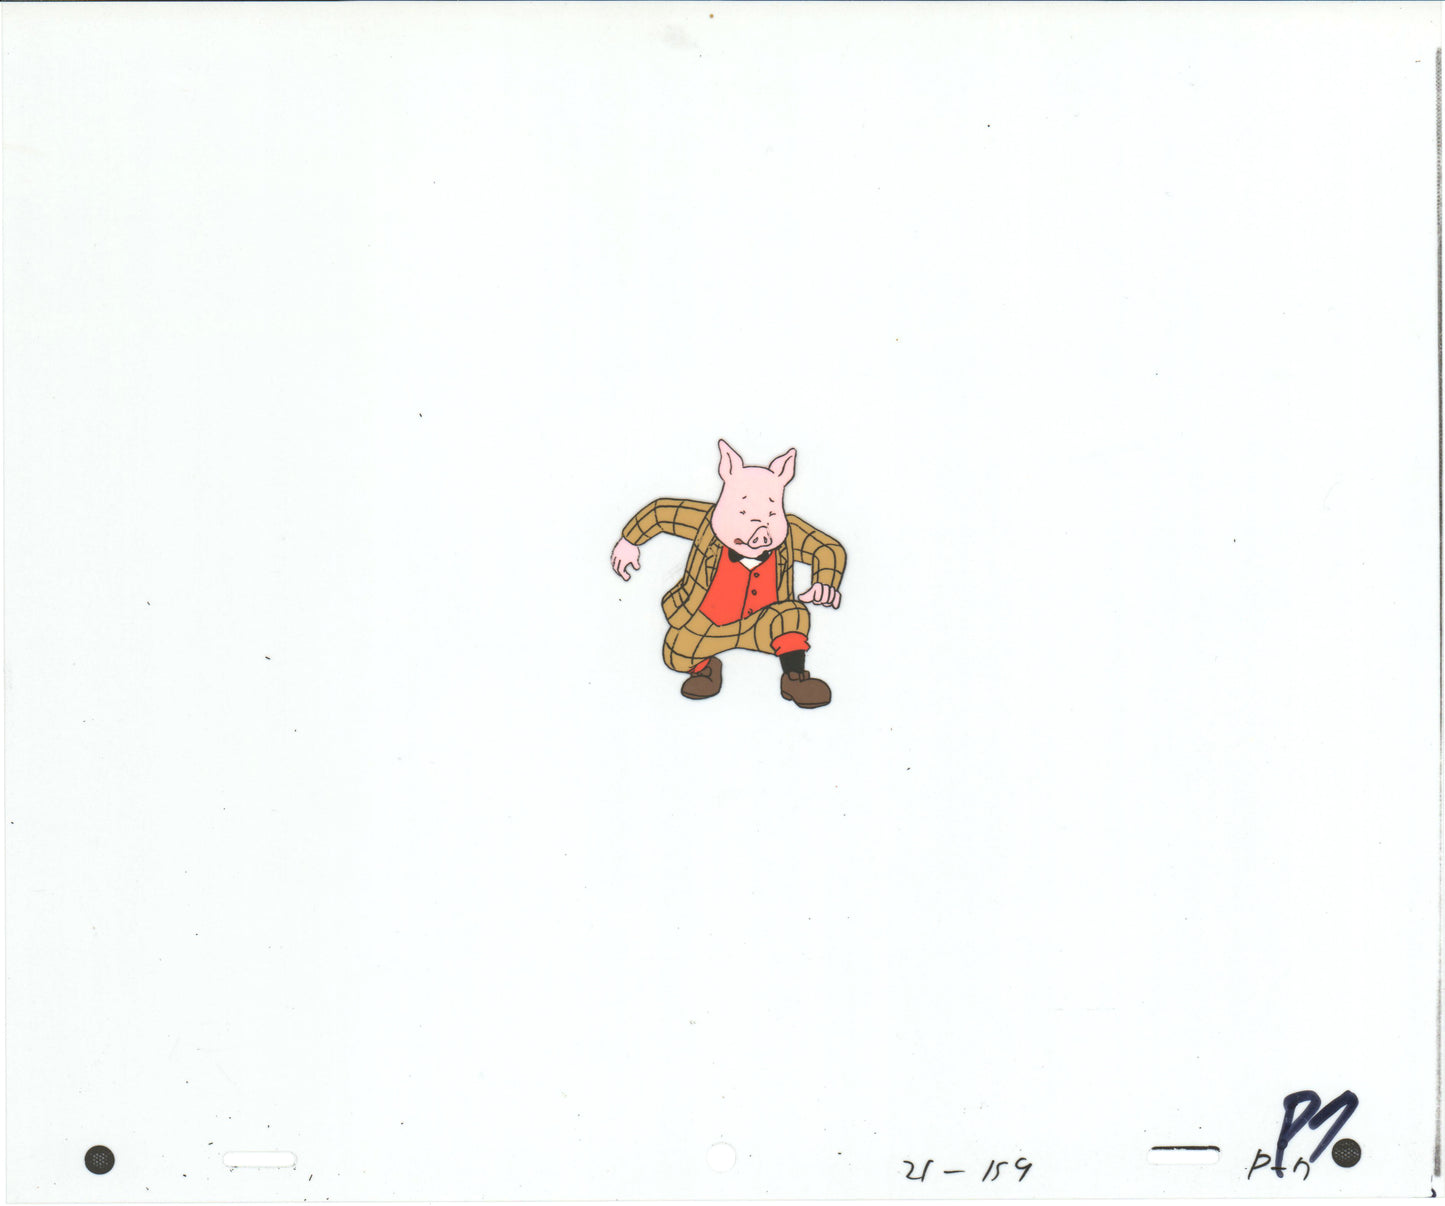 RUPERT Bear Podgy Pig Original Production Animation Cel from the Cartoon by Nelvana Tourtel Animation 1990s 8-335